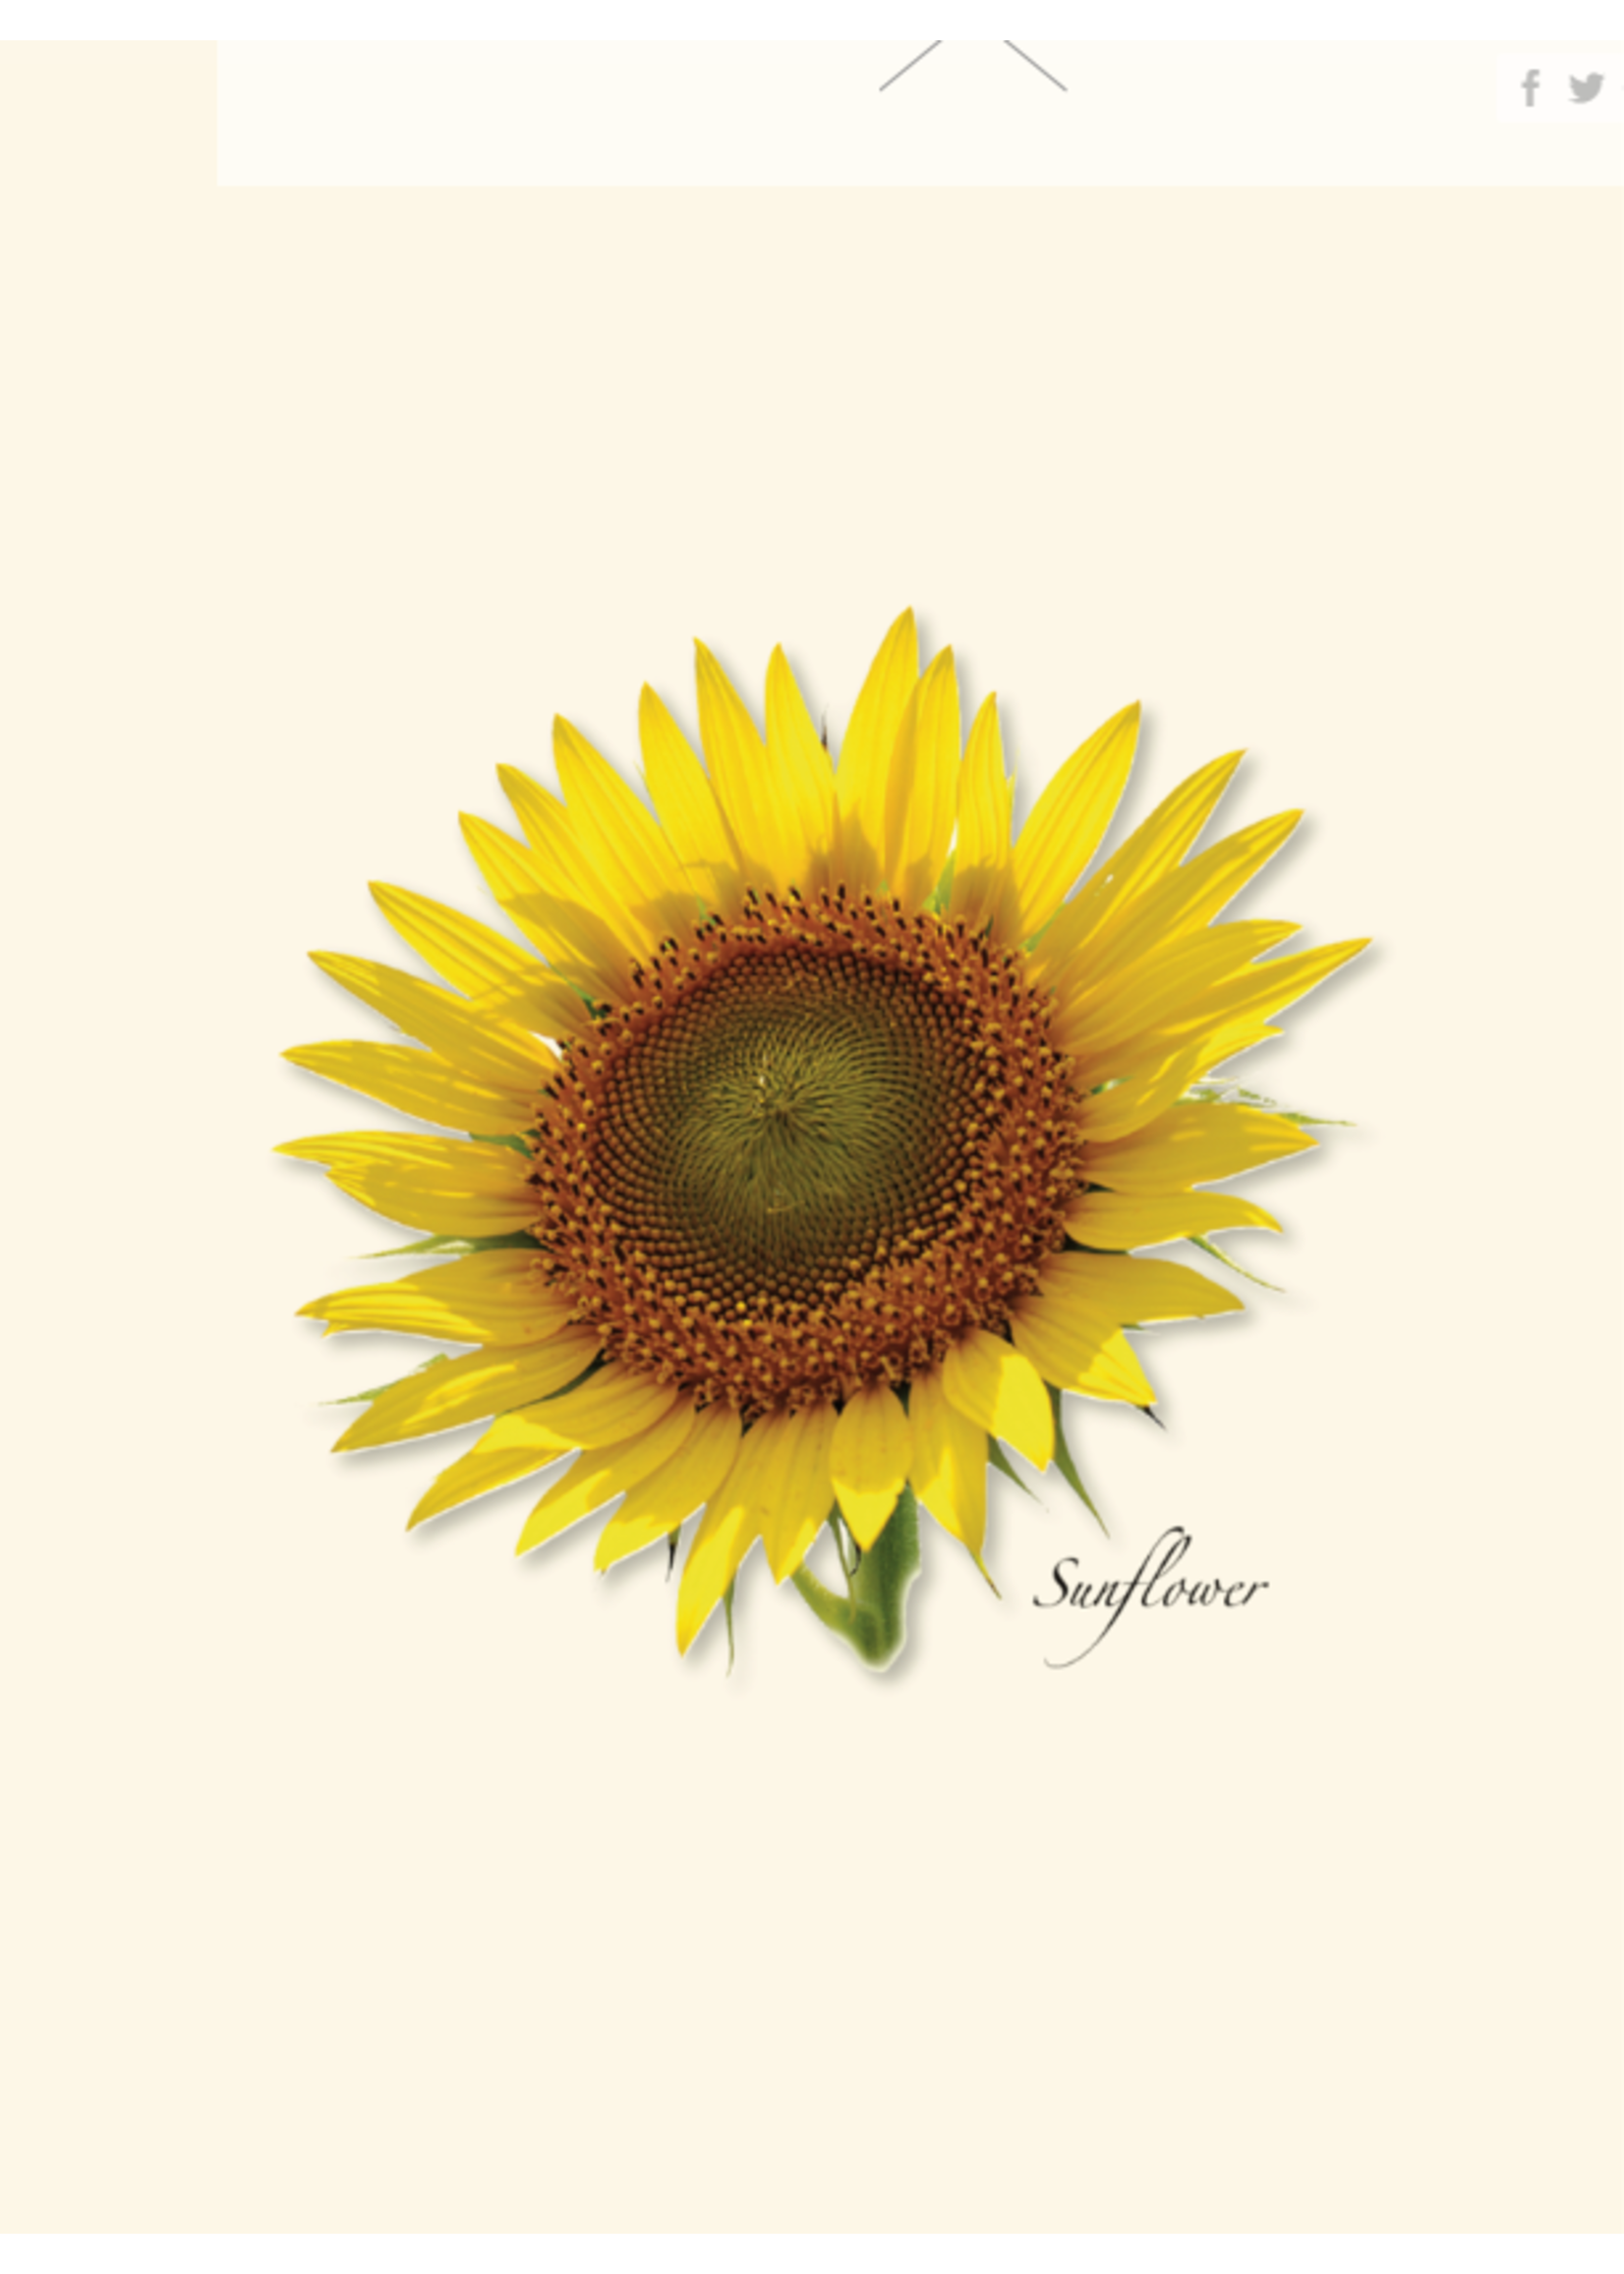 Earth Sky Water Sunflower